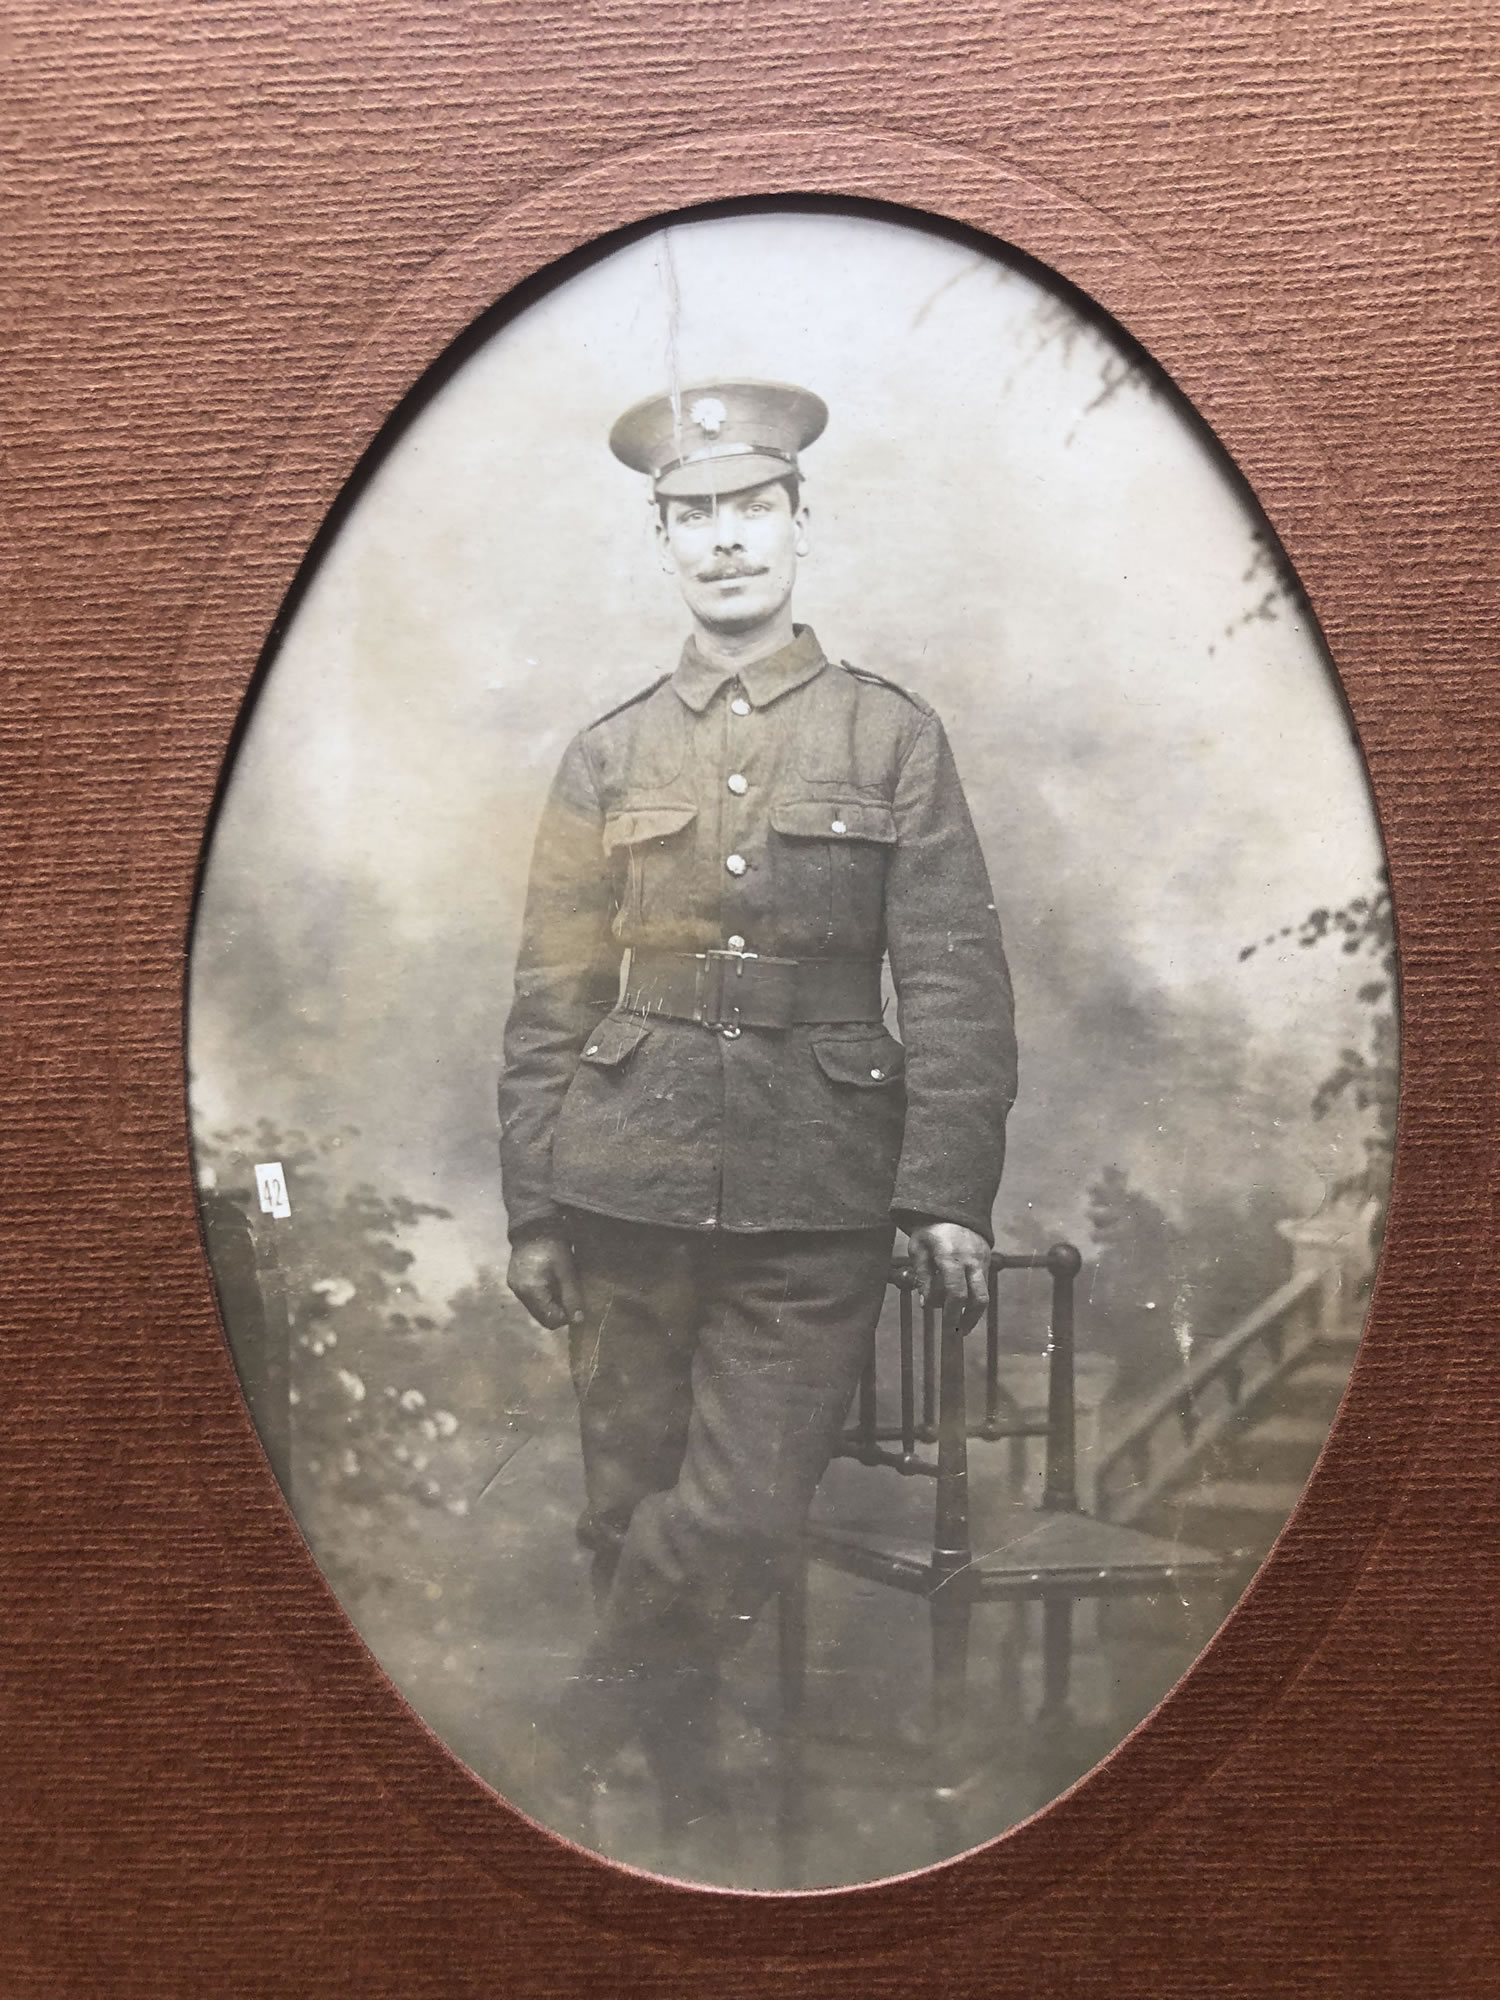 John George Boorman in uniform - David Walliams' paternal great grandfather